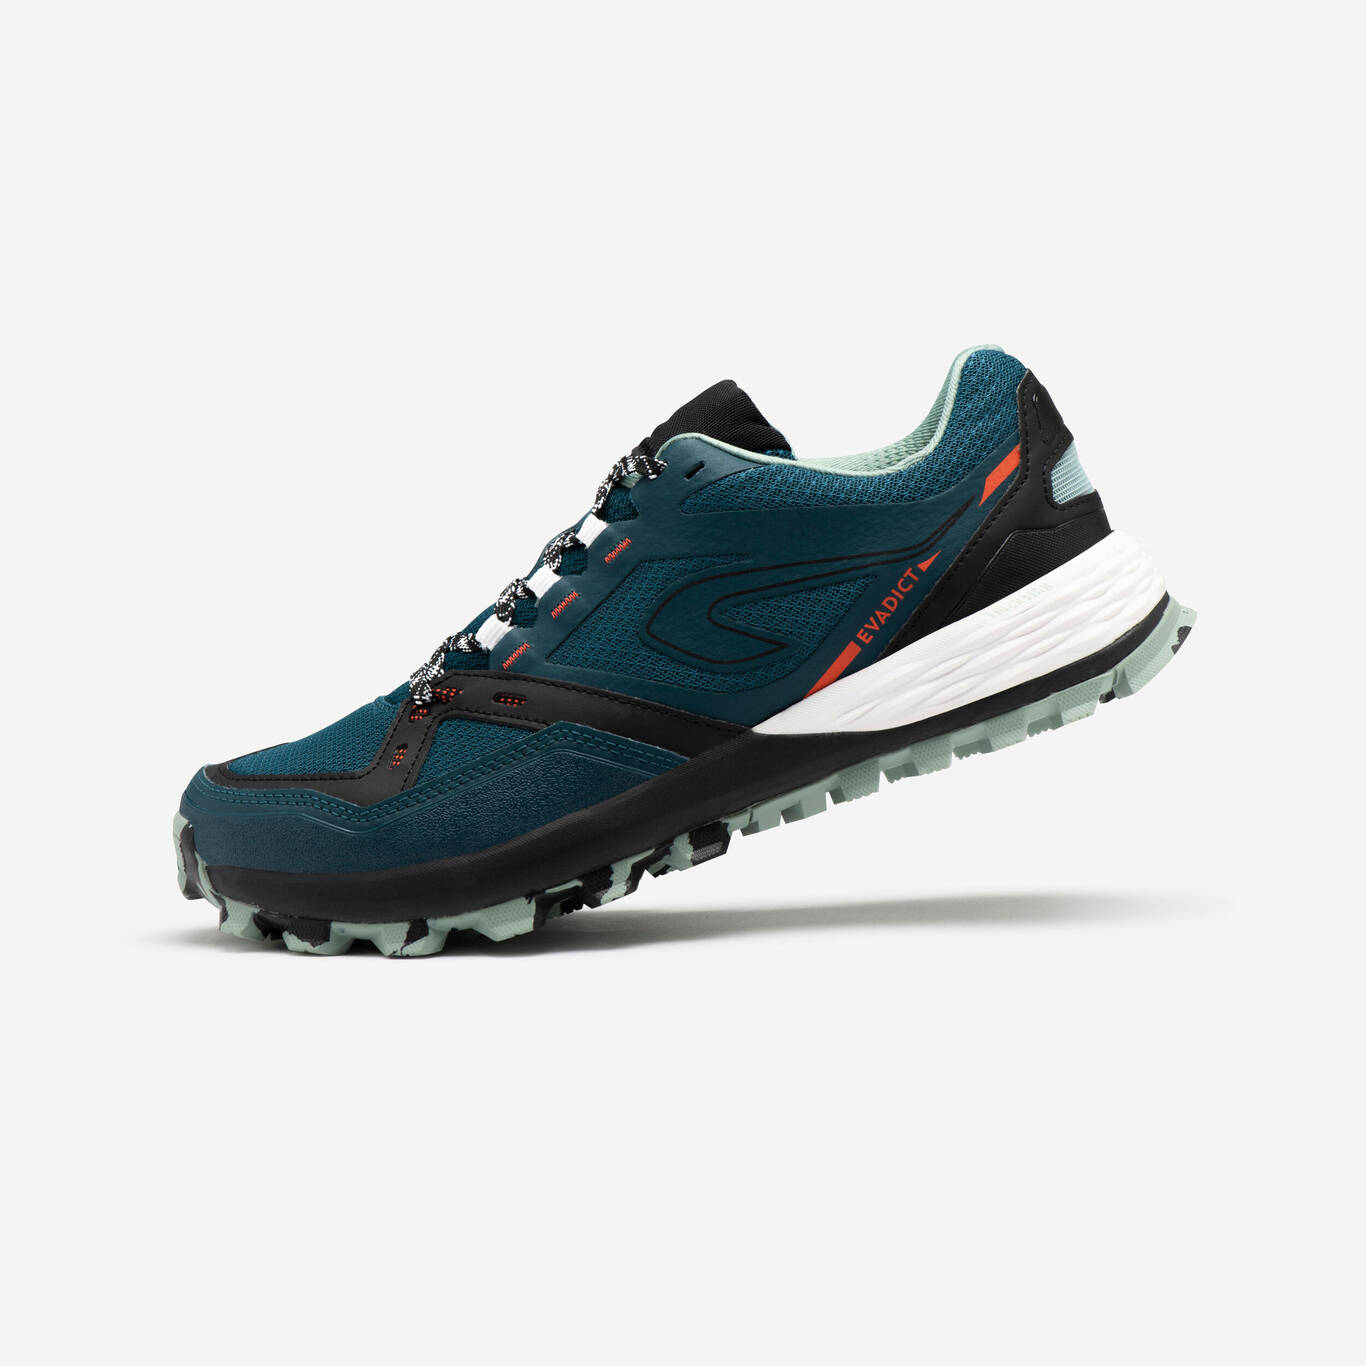 Men's mt2 trail running shoes - blue/green